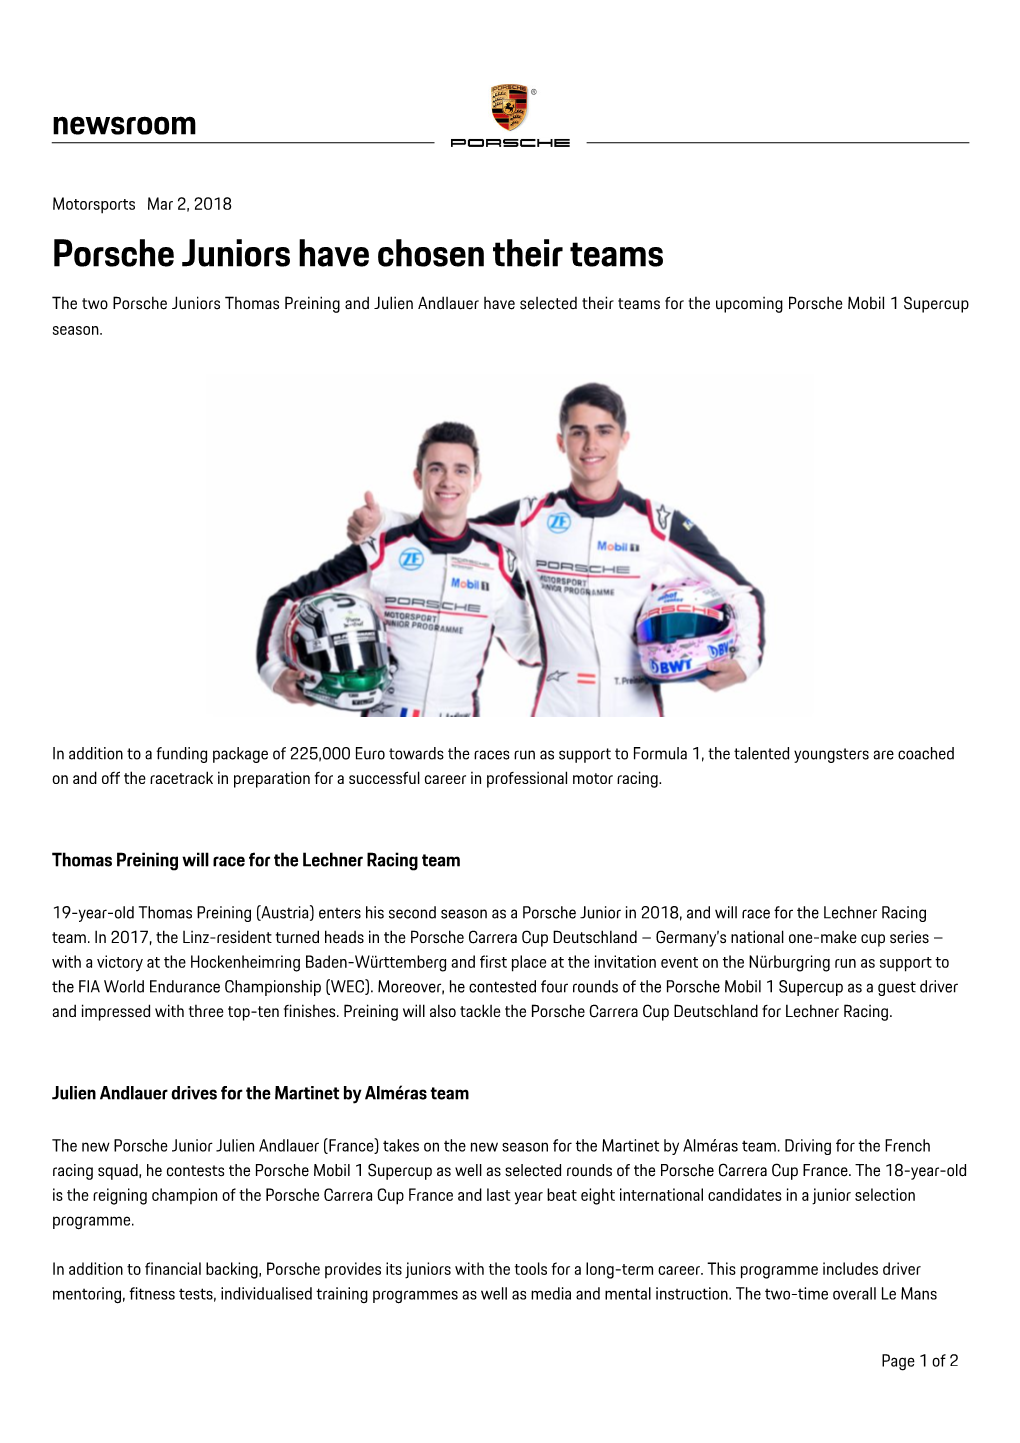 Porsche Juniors Have Chosen Their Teams